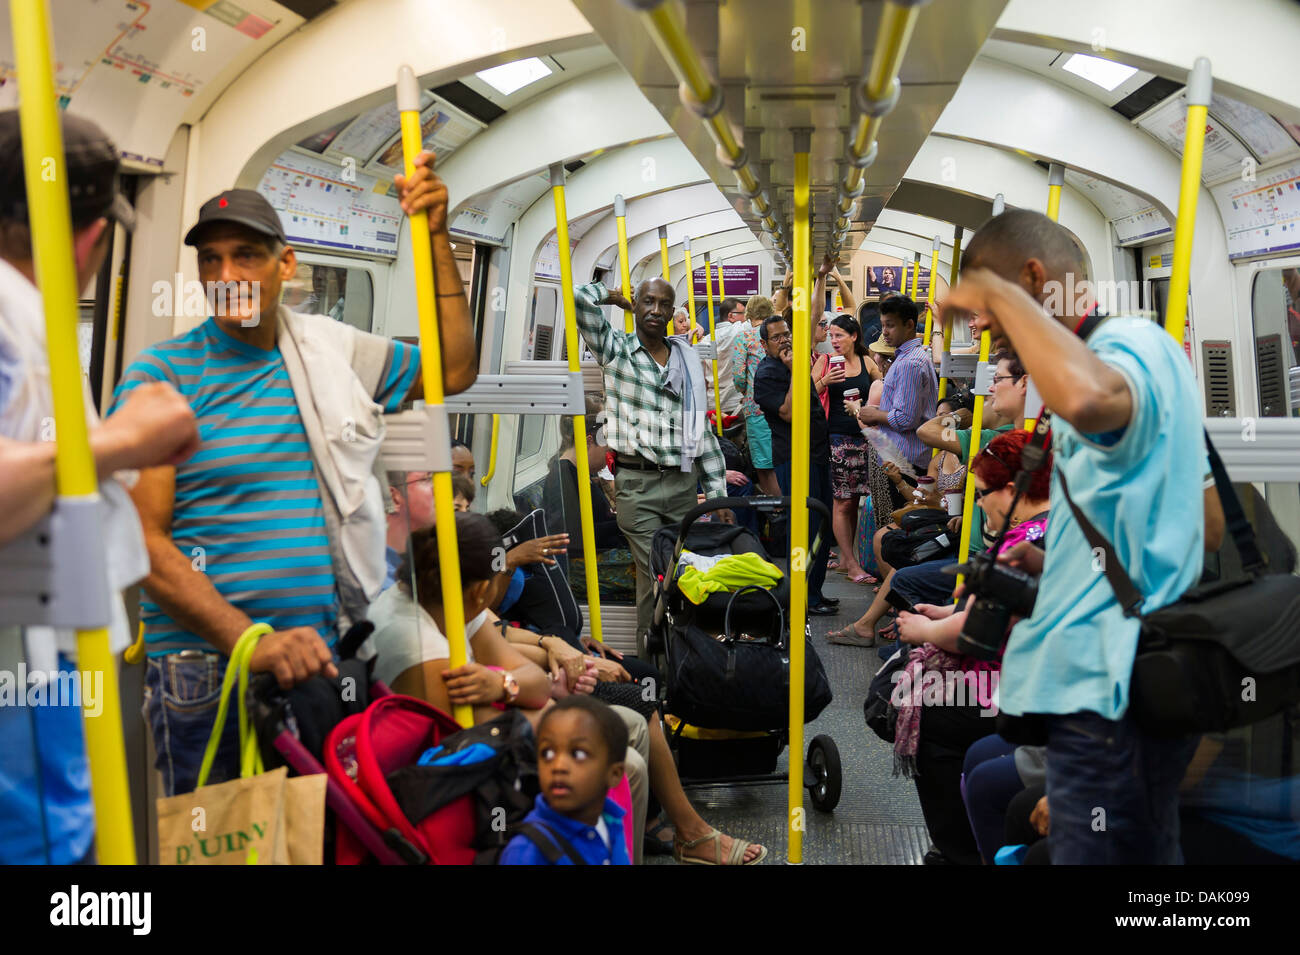 Passagiere in einer U-Bahn in London. Stockfoto